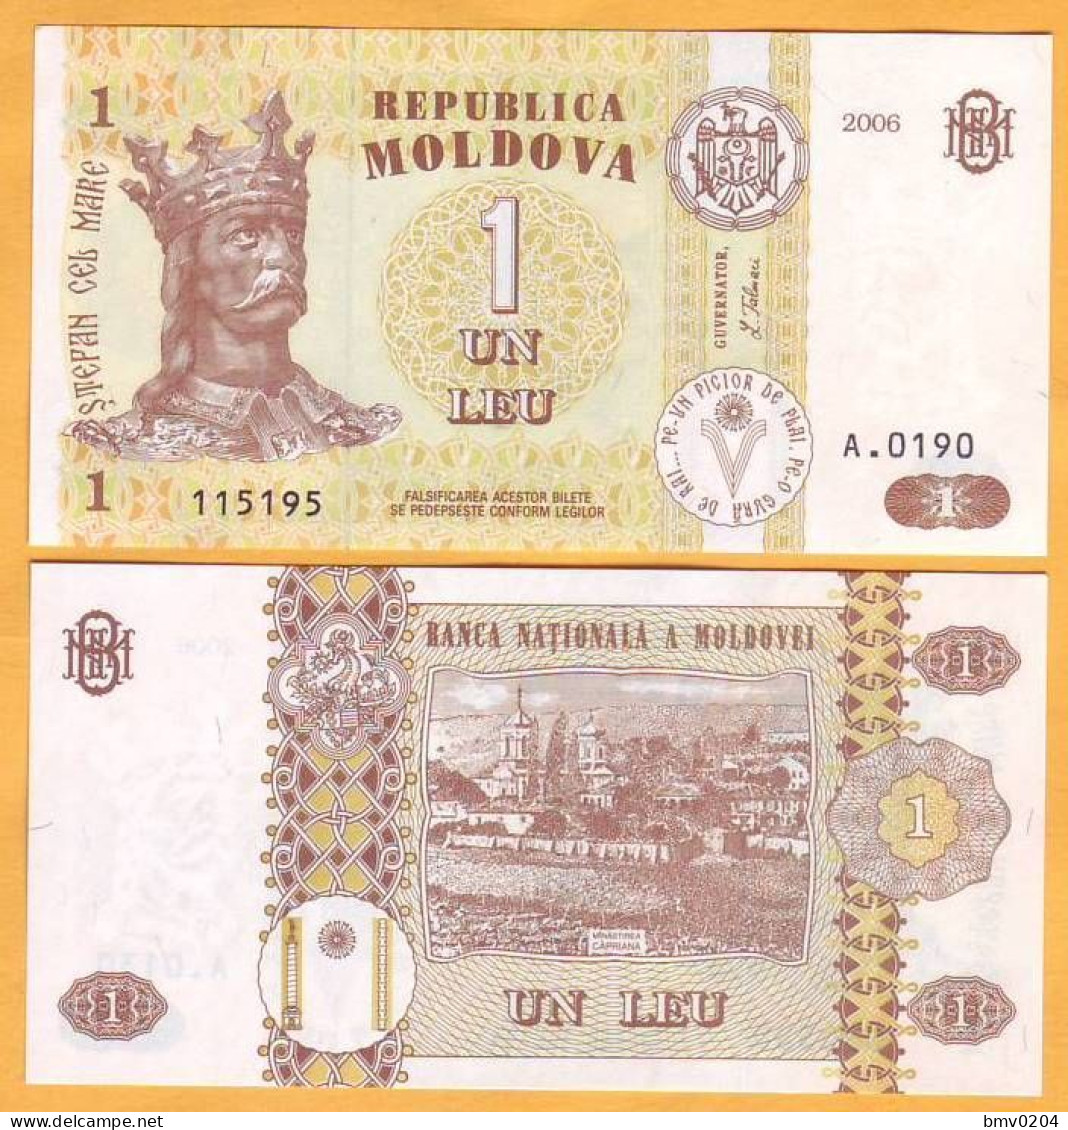 Moldova Moldavie  5 Banknotes  "1 LEI  2006", UNC  One Set Of 5 1 Leu Banknotes. - Moldawien (Moldau)